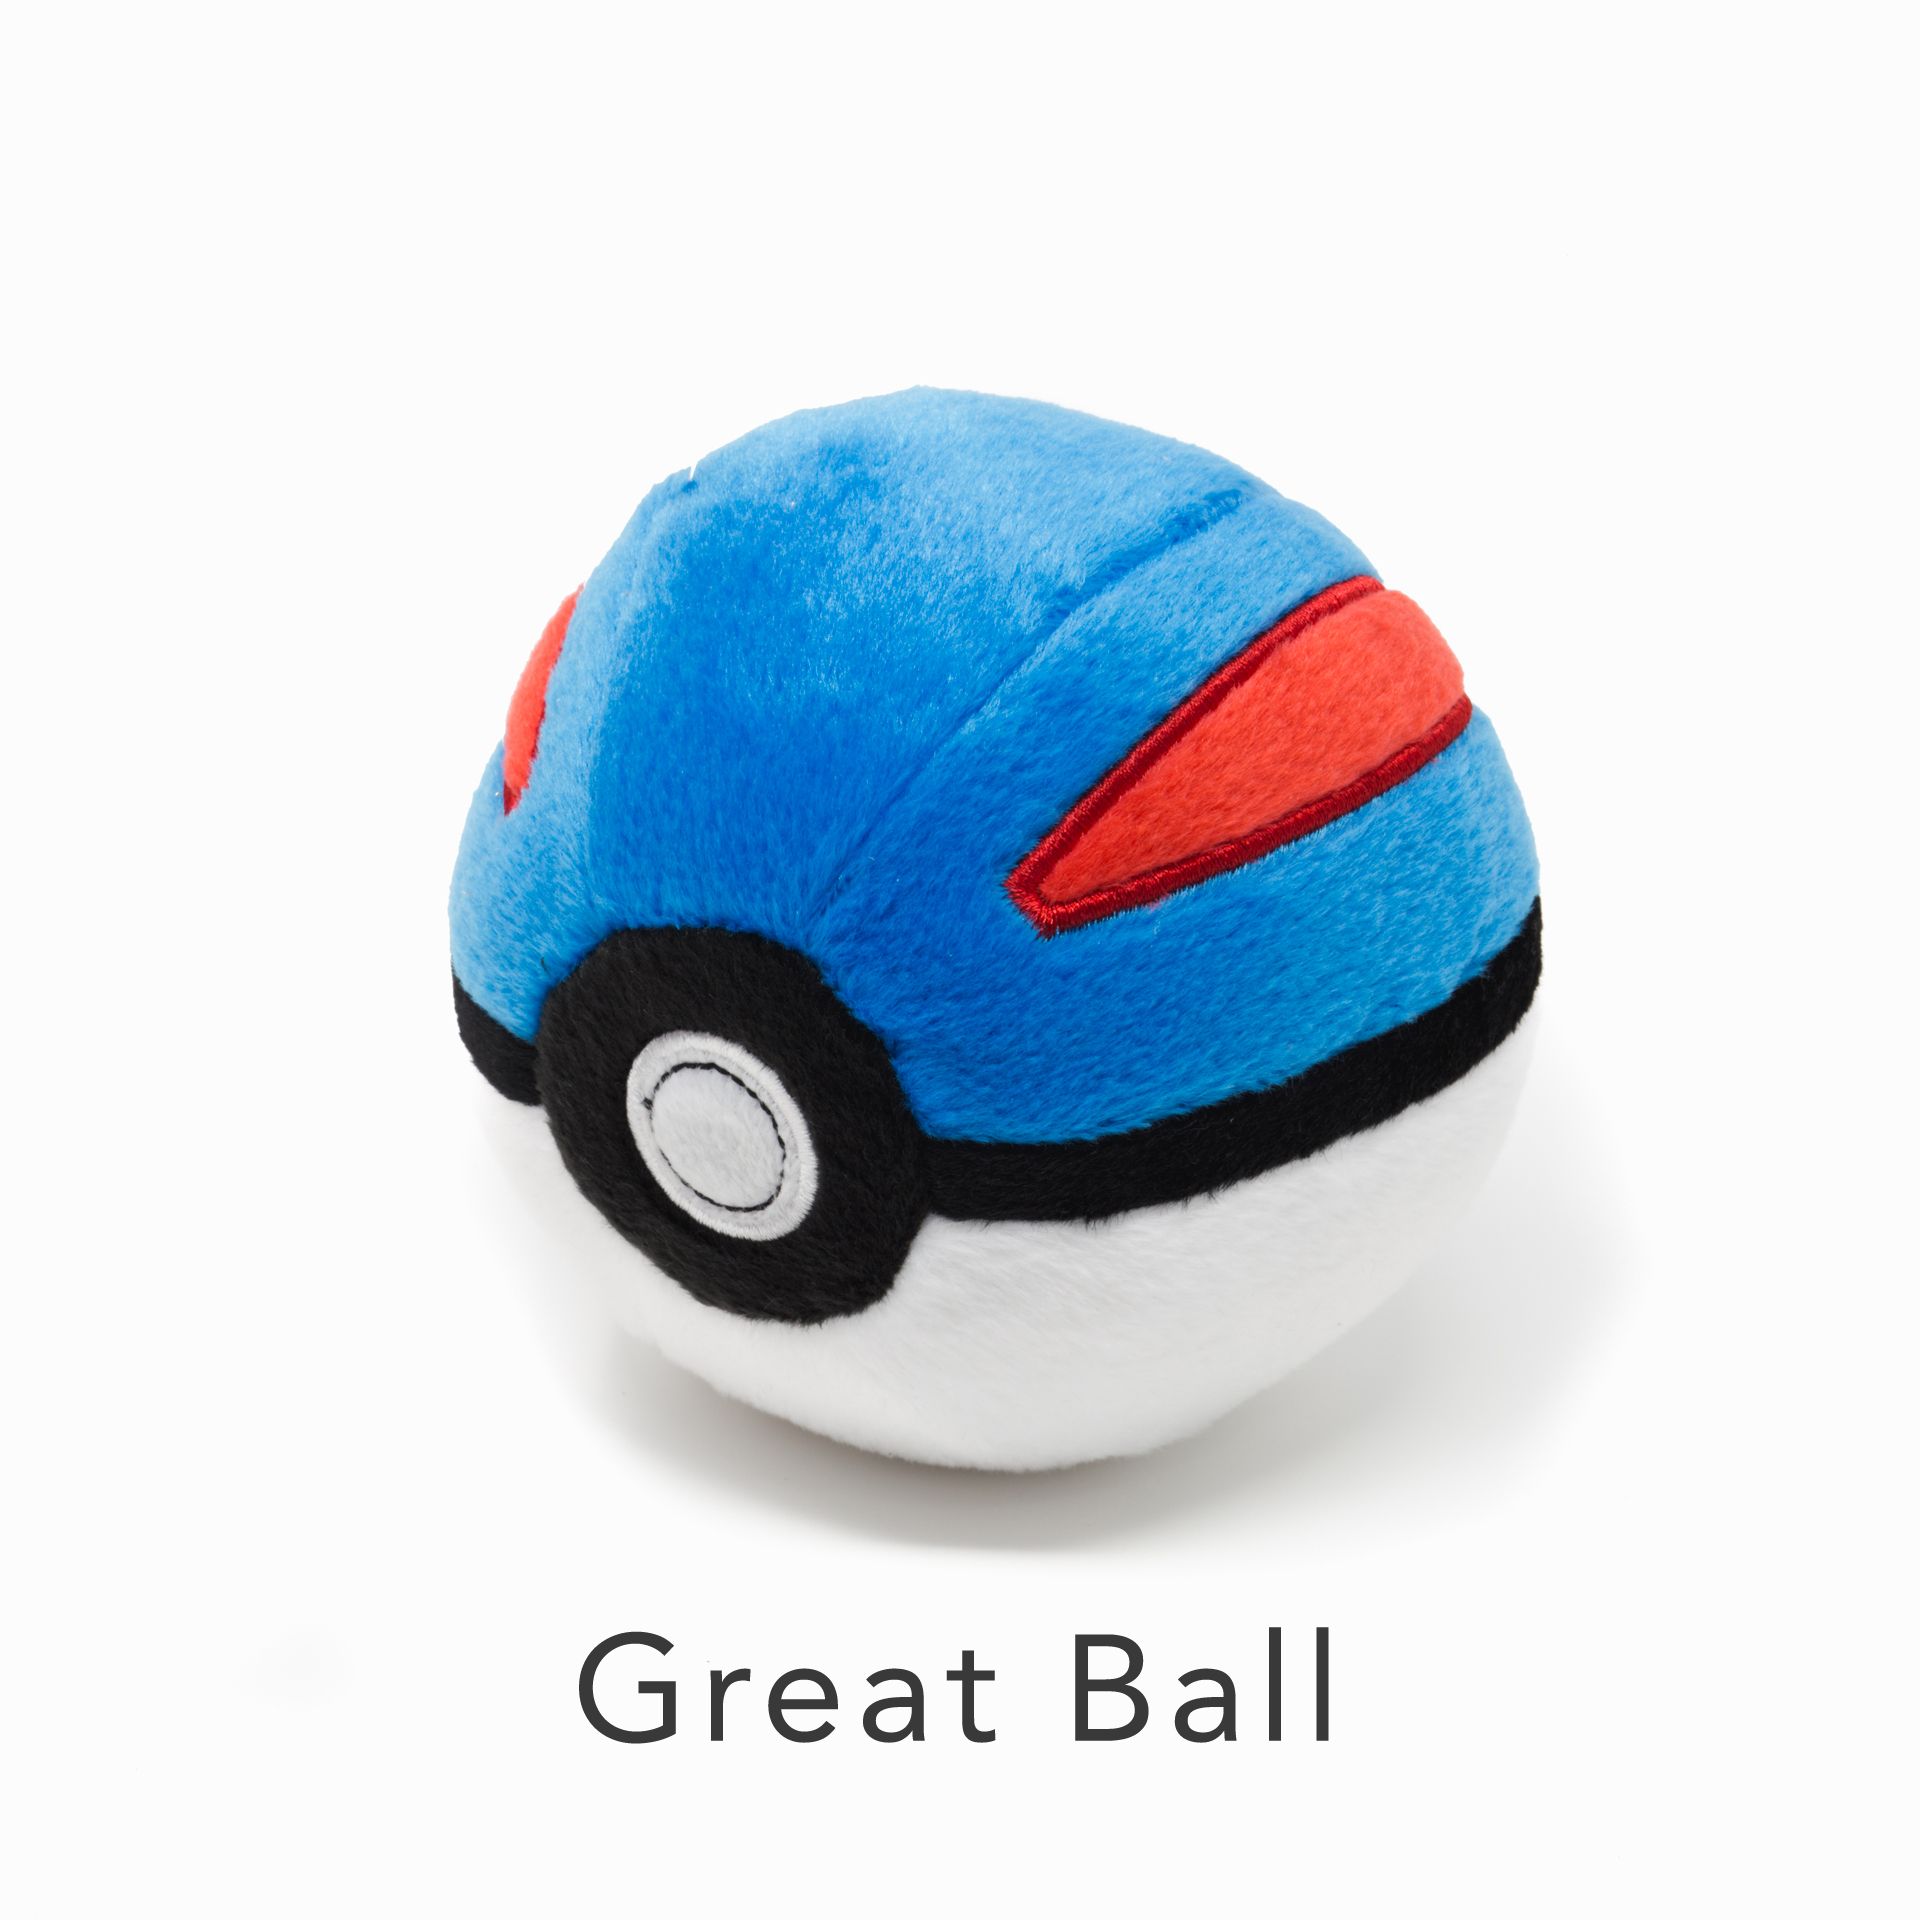 Pokeball Mini Poke Ball 2pc Plush Pokeball GreatBall Plush New SALE 